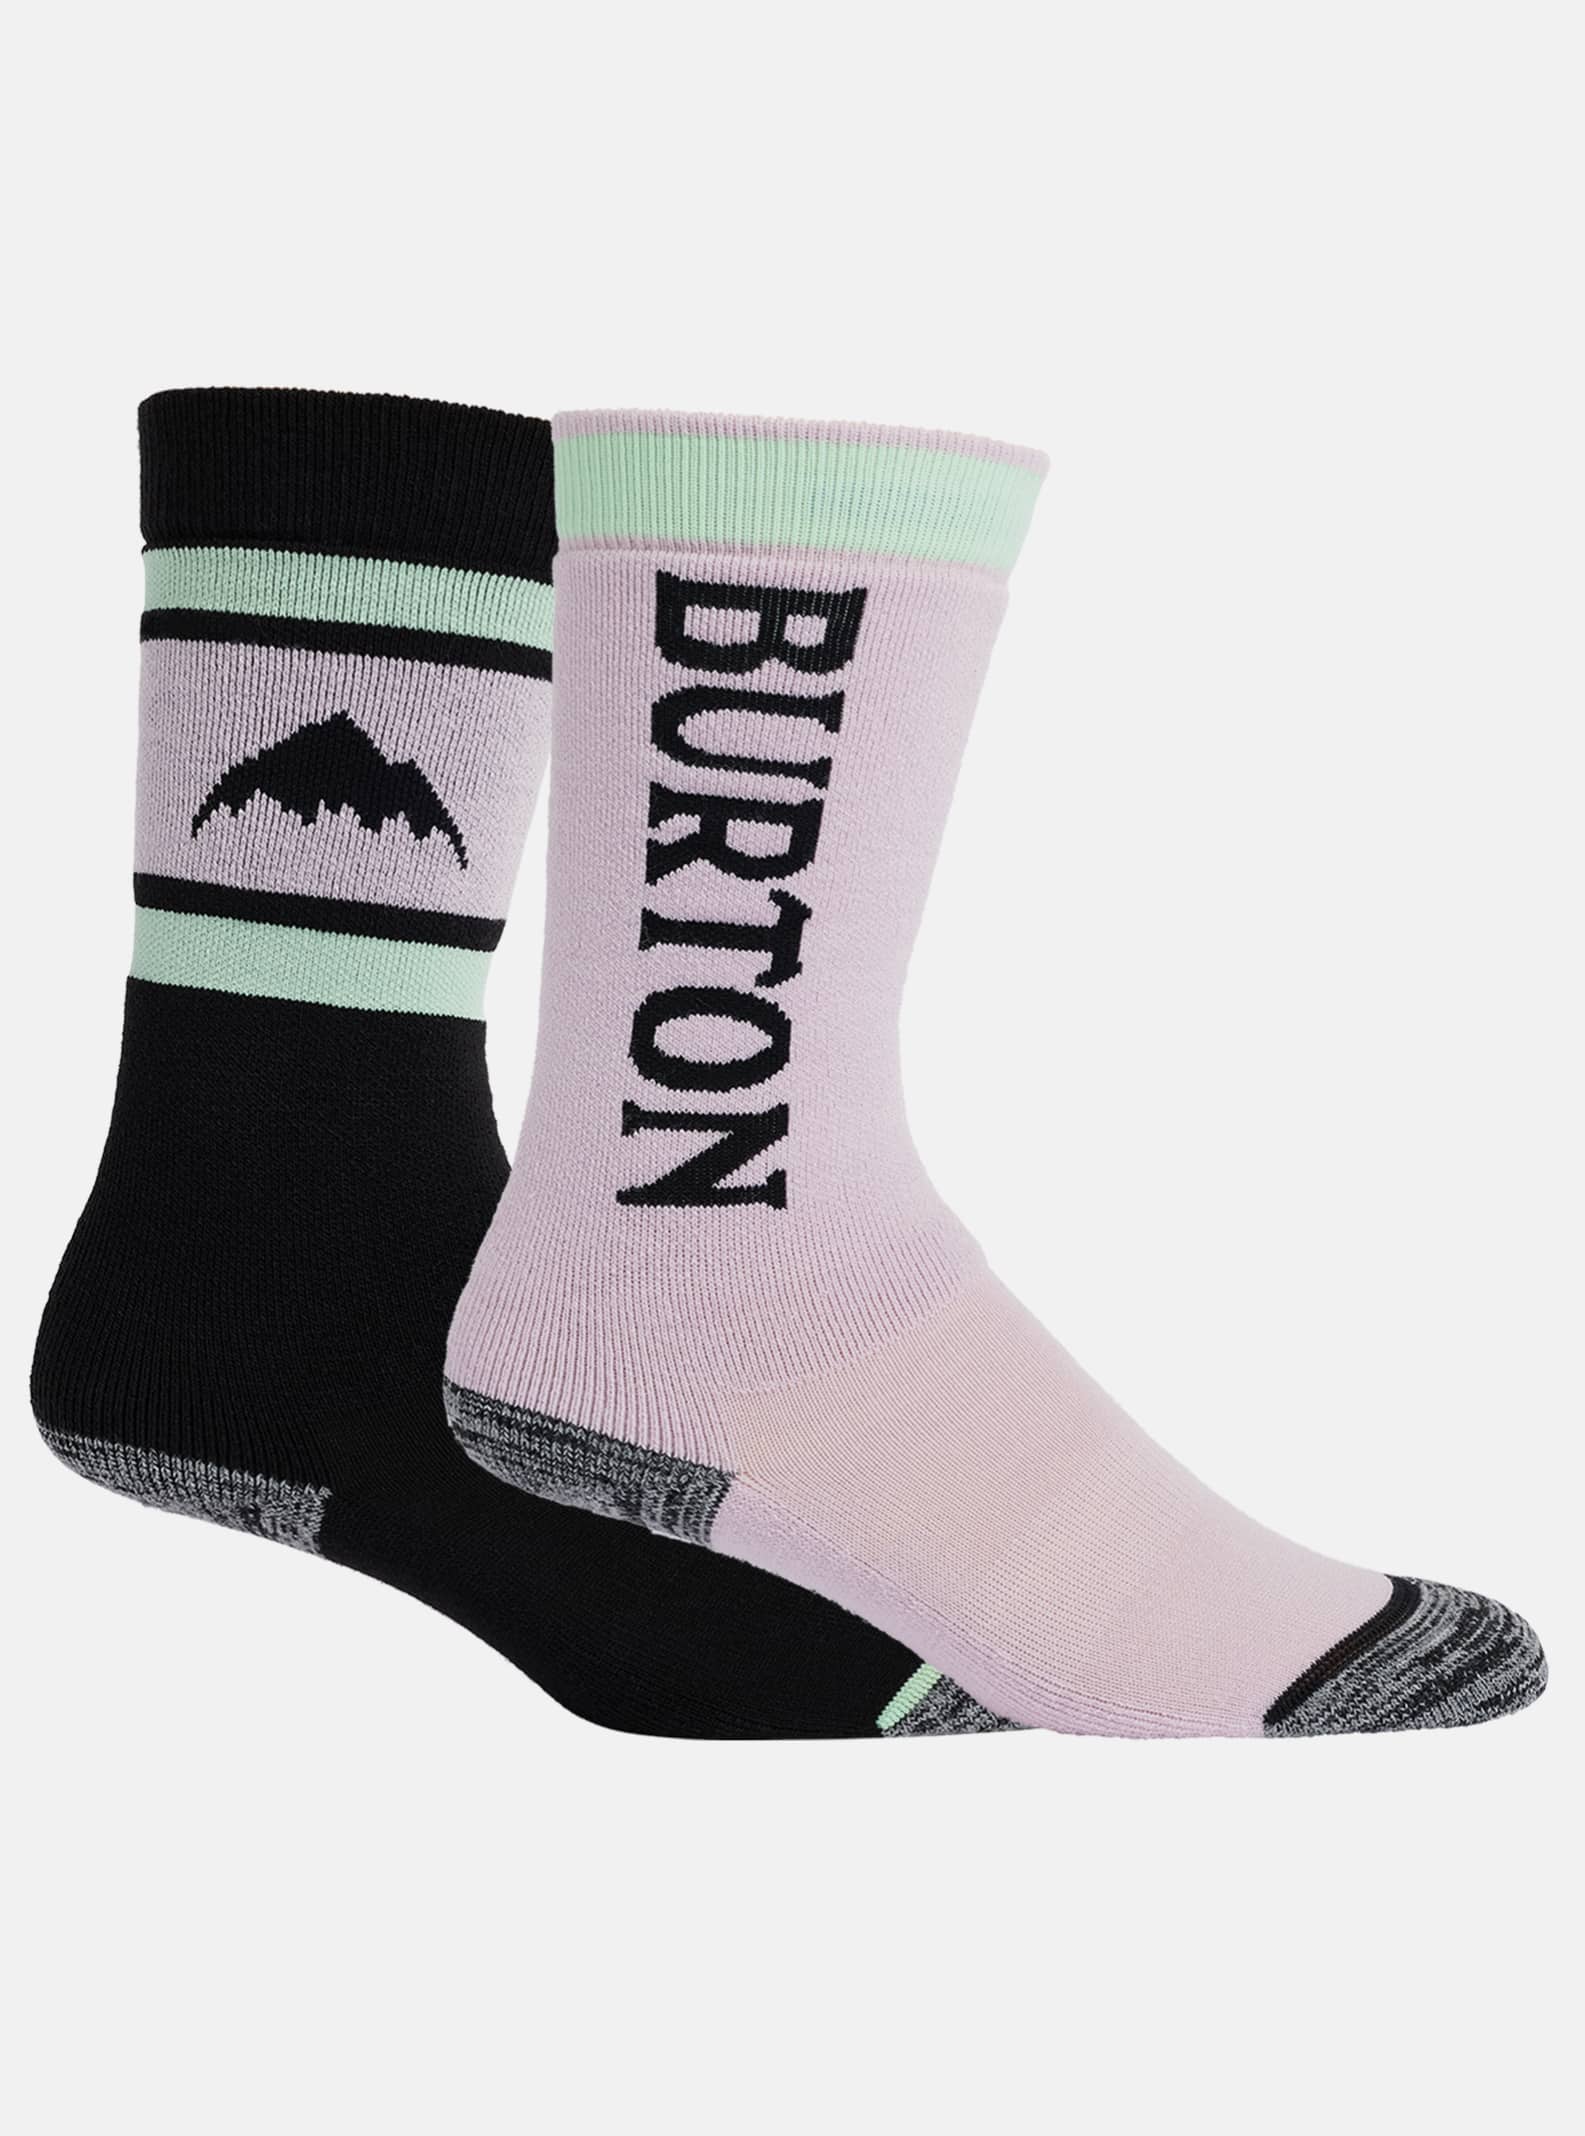 Kids' Socks | Burton Snowboards GB